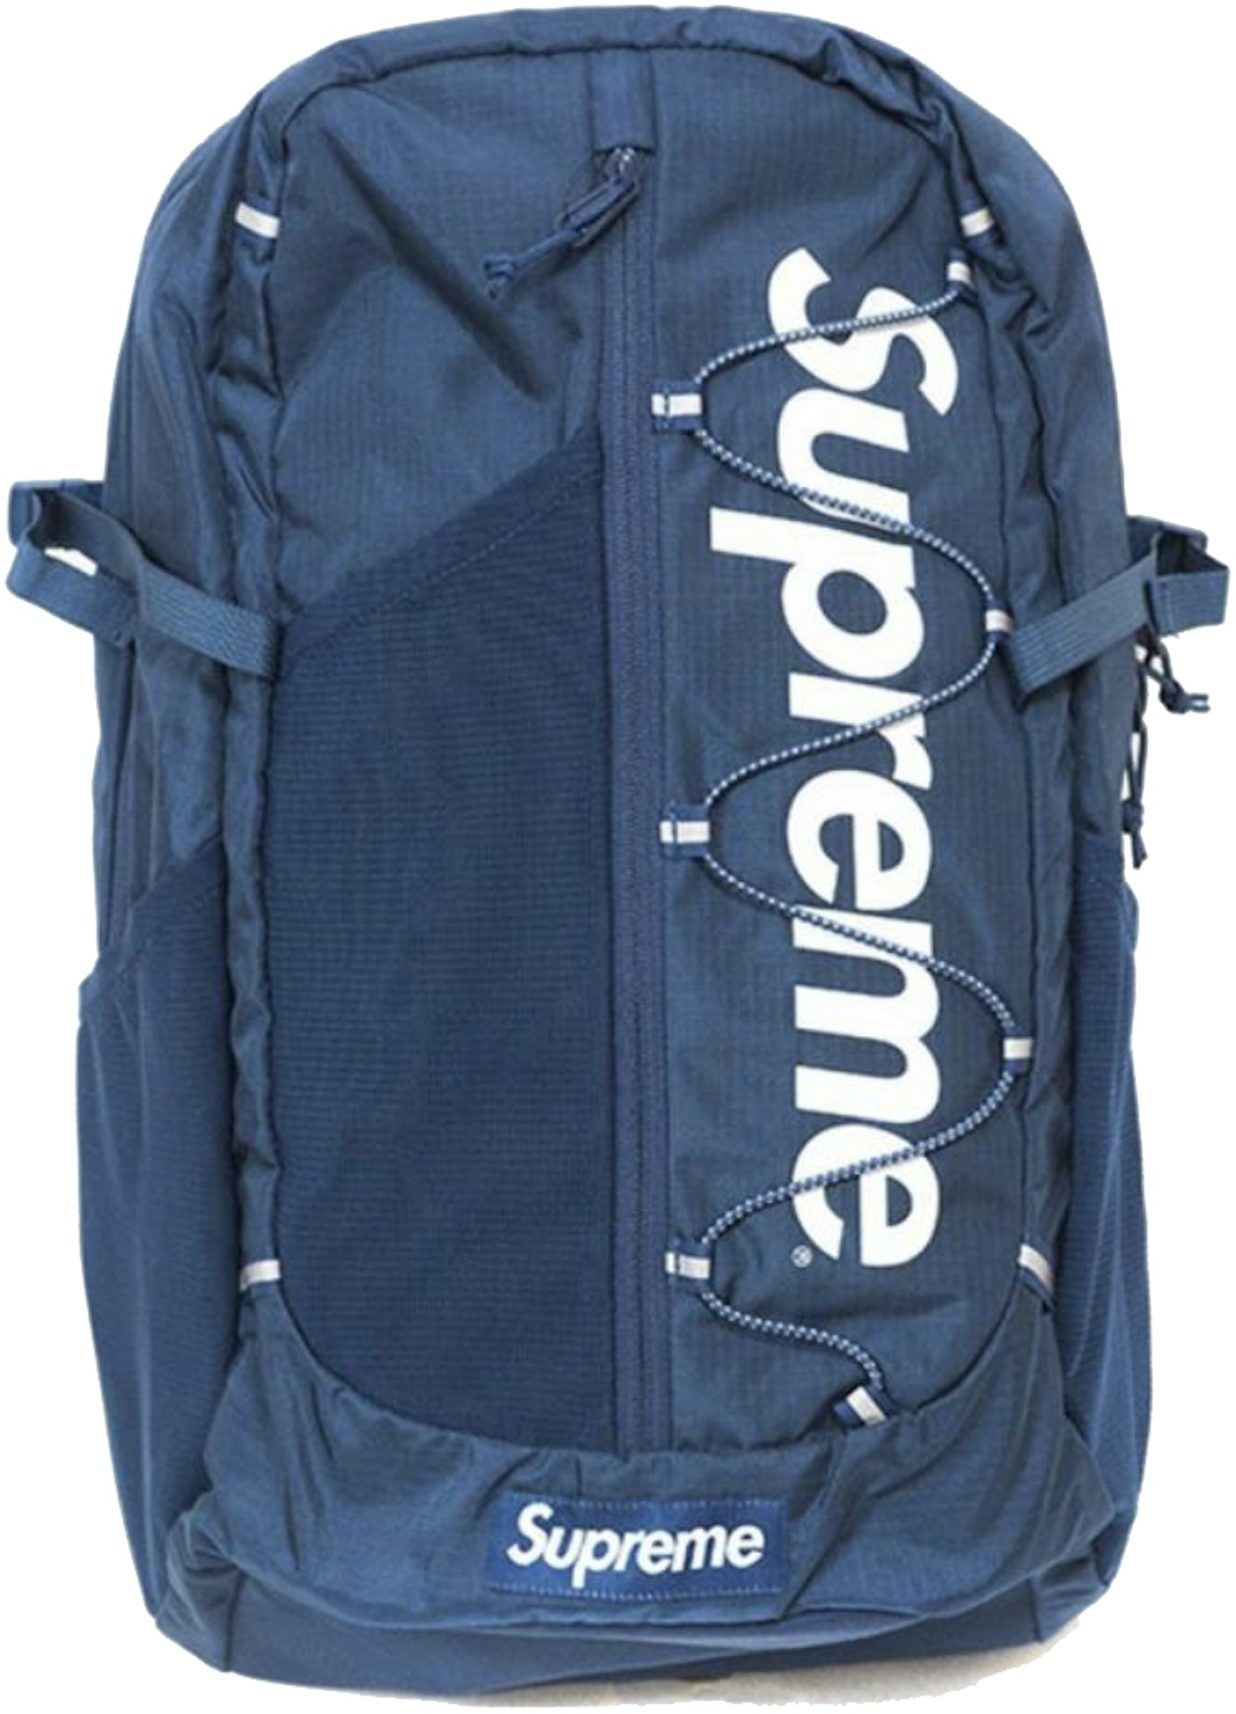 Supreme Blue Camo BackPack  Camo backpack, Blue camo, Supreme bag